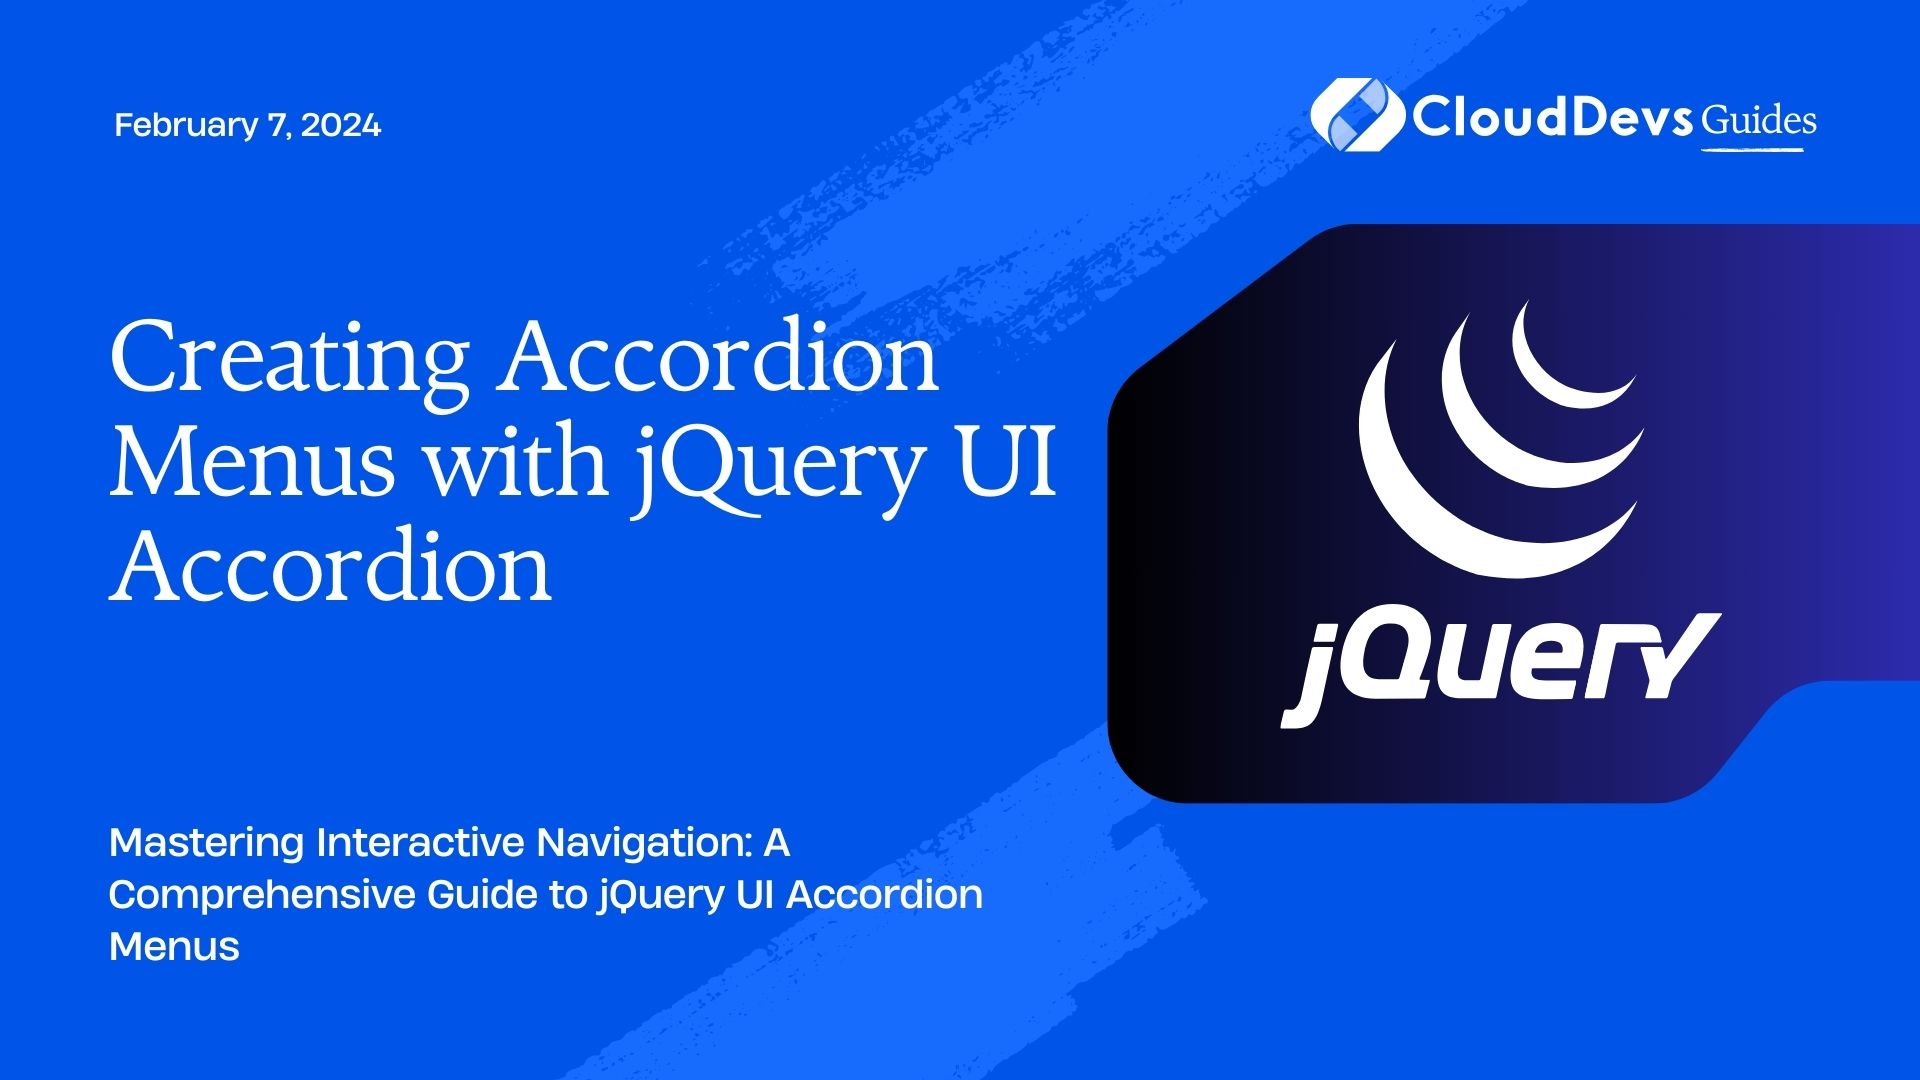 Creating Accordion Menus with jQuery UI Accordion